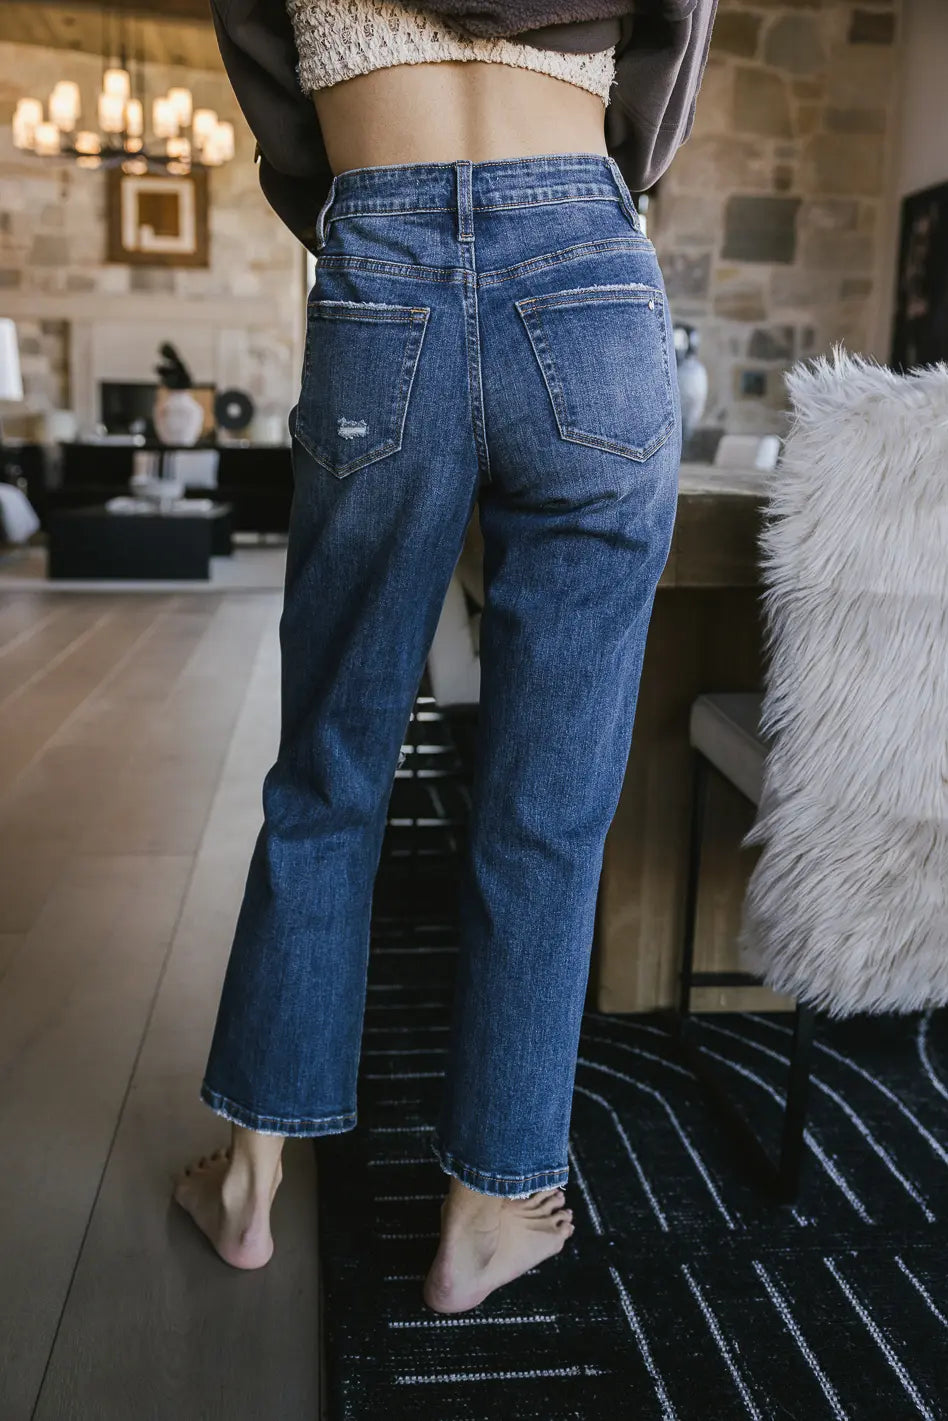 Joni Jeans High Waist Pants sizes:25,26,27,28,29,30,31,32